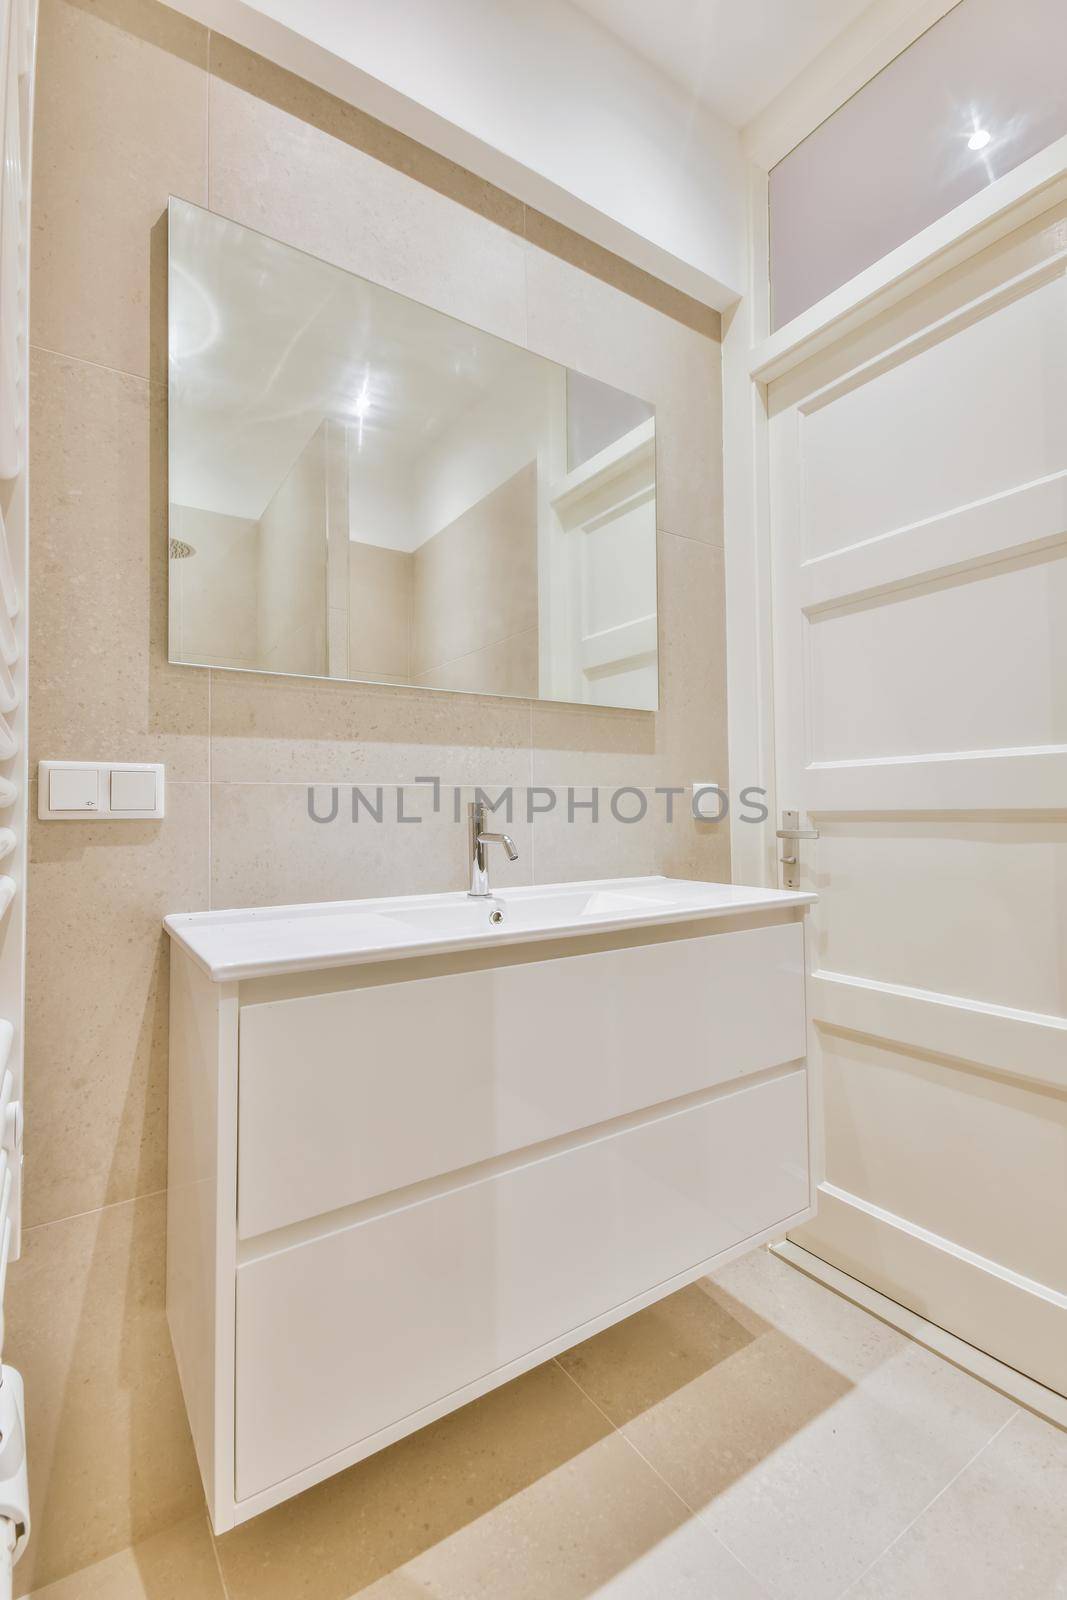 Luxury bathroom interior by casamedia